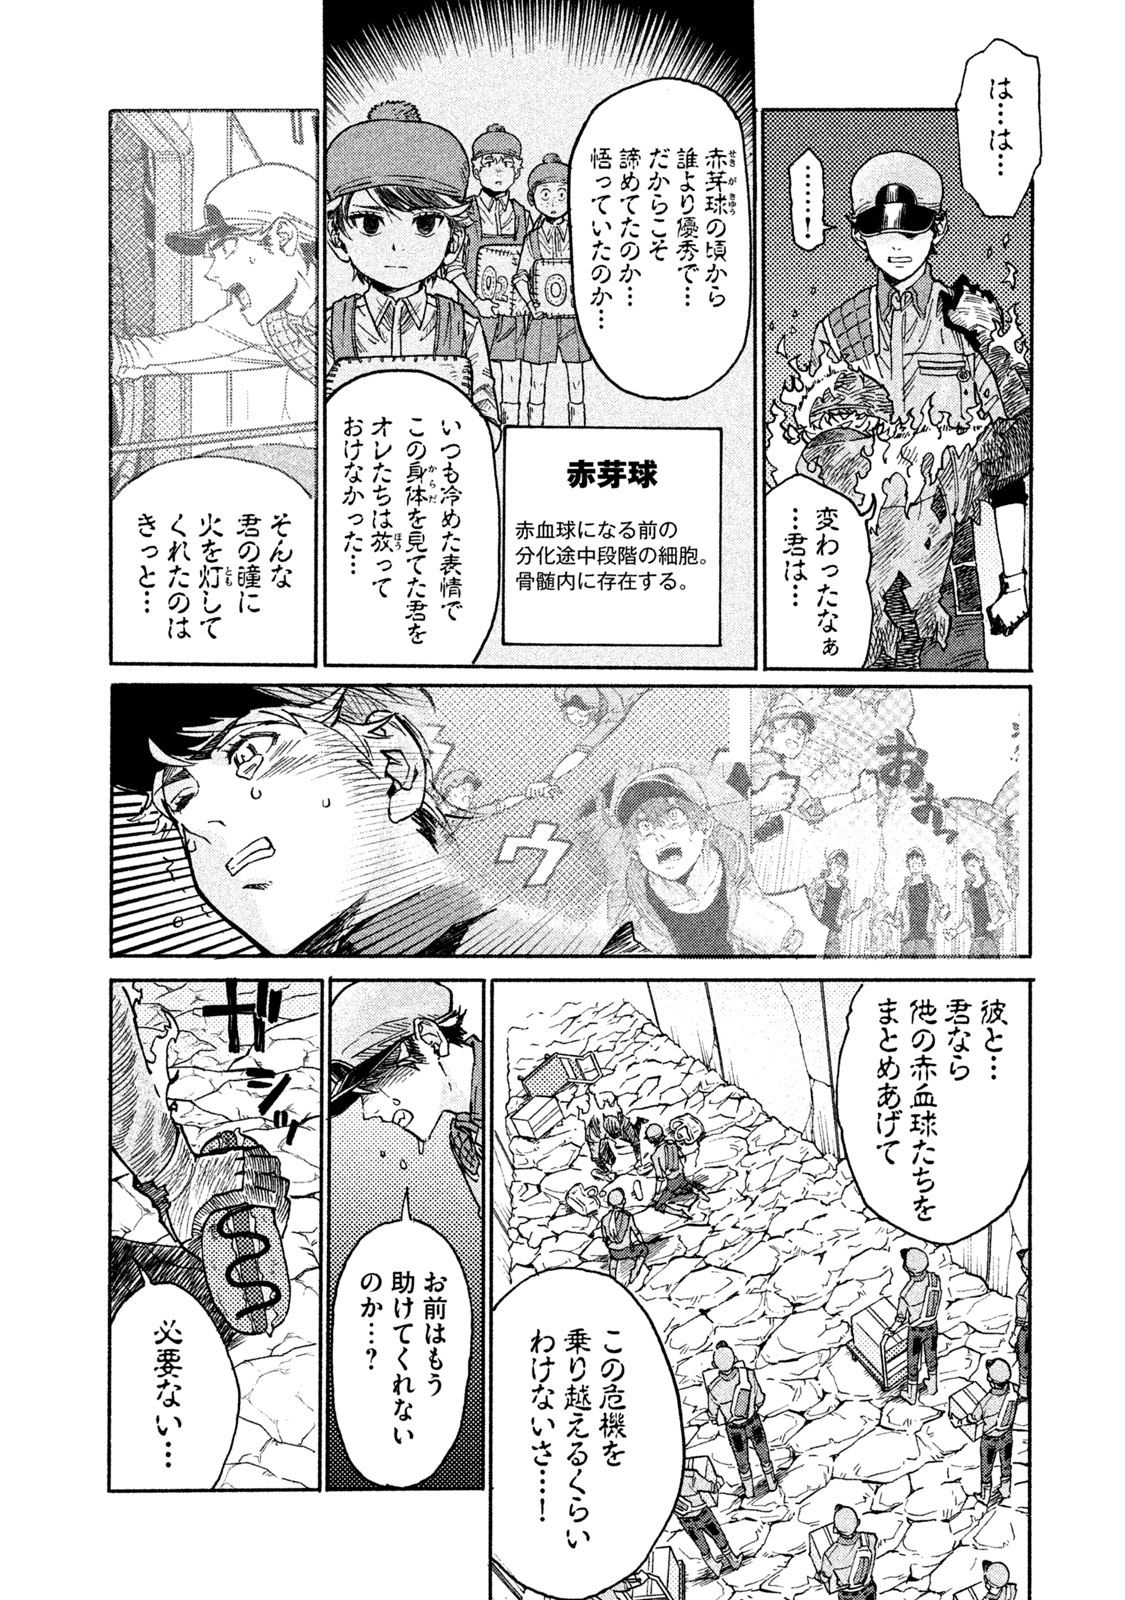 Hataraku Saibou BLACK - Chapter 25 - Page 10